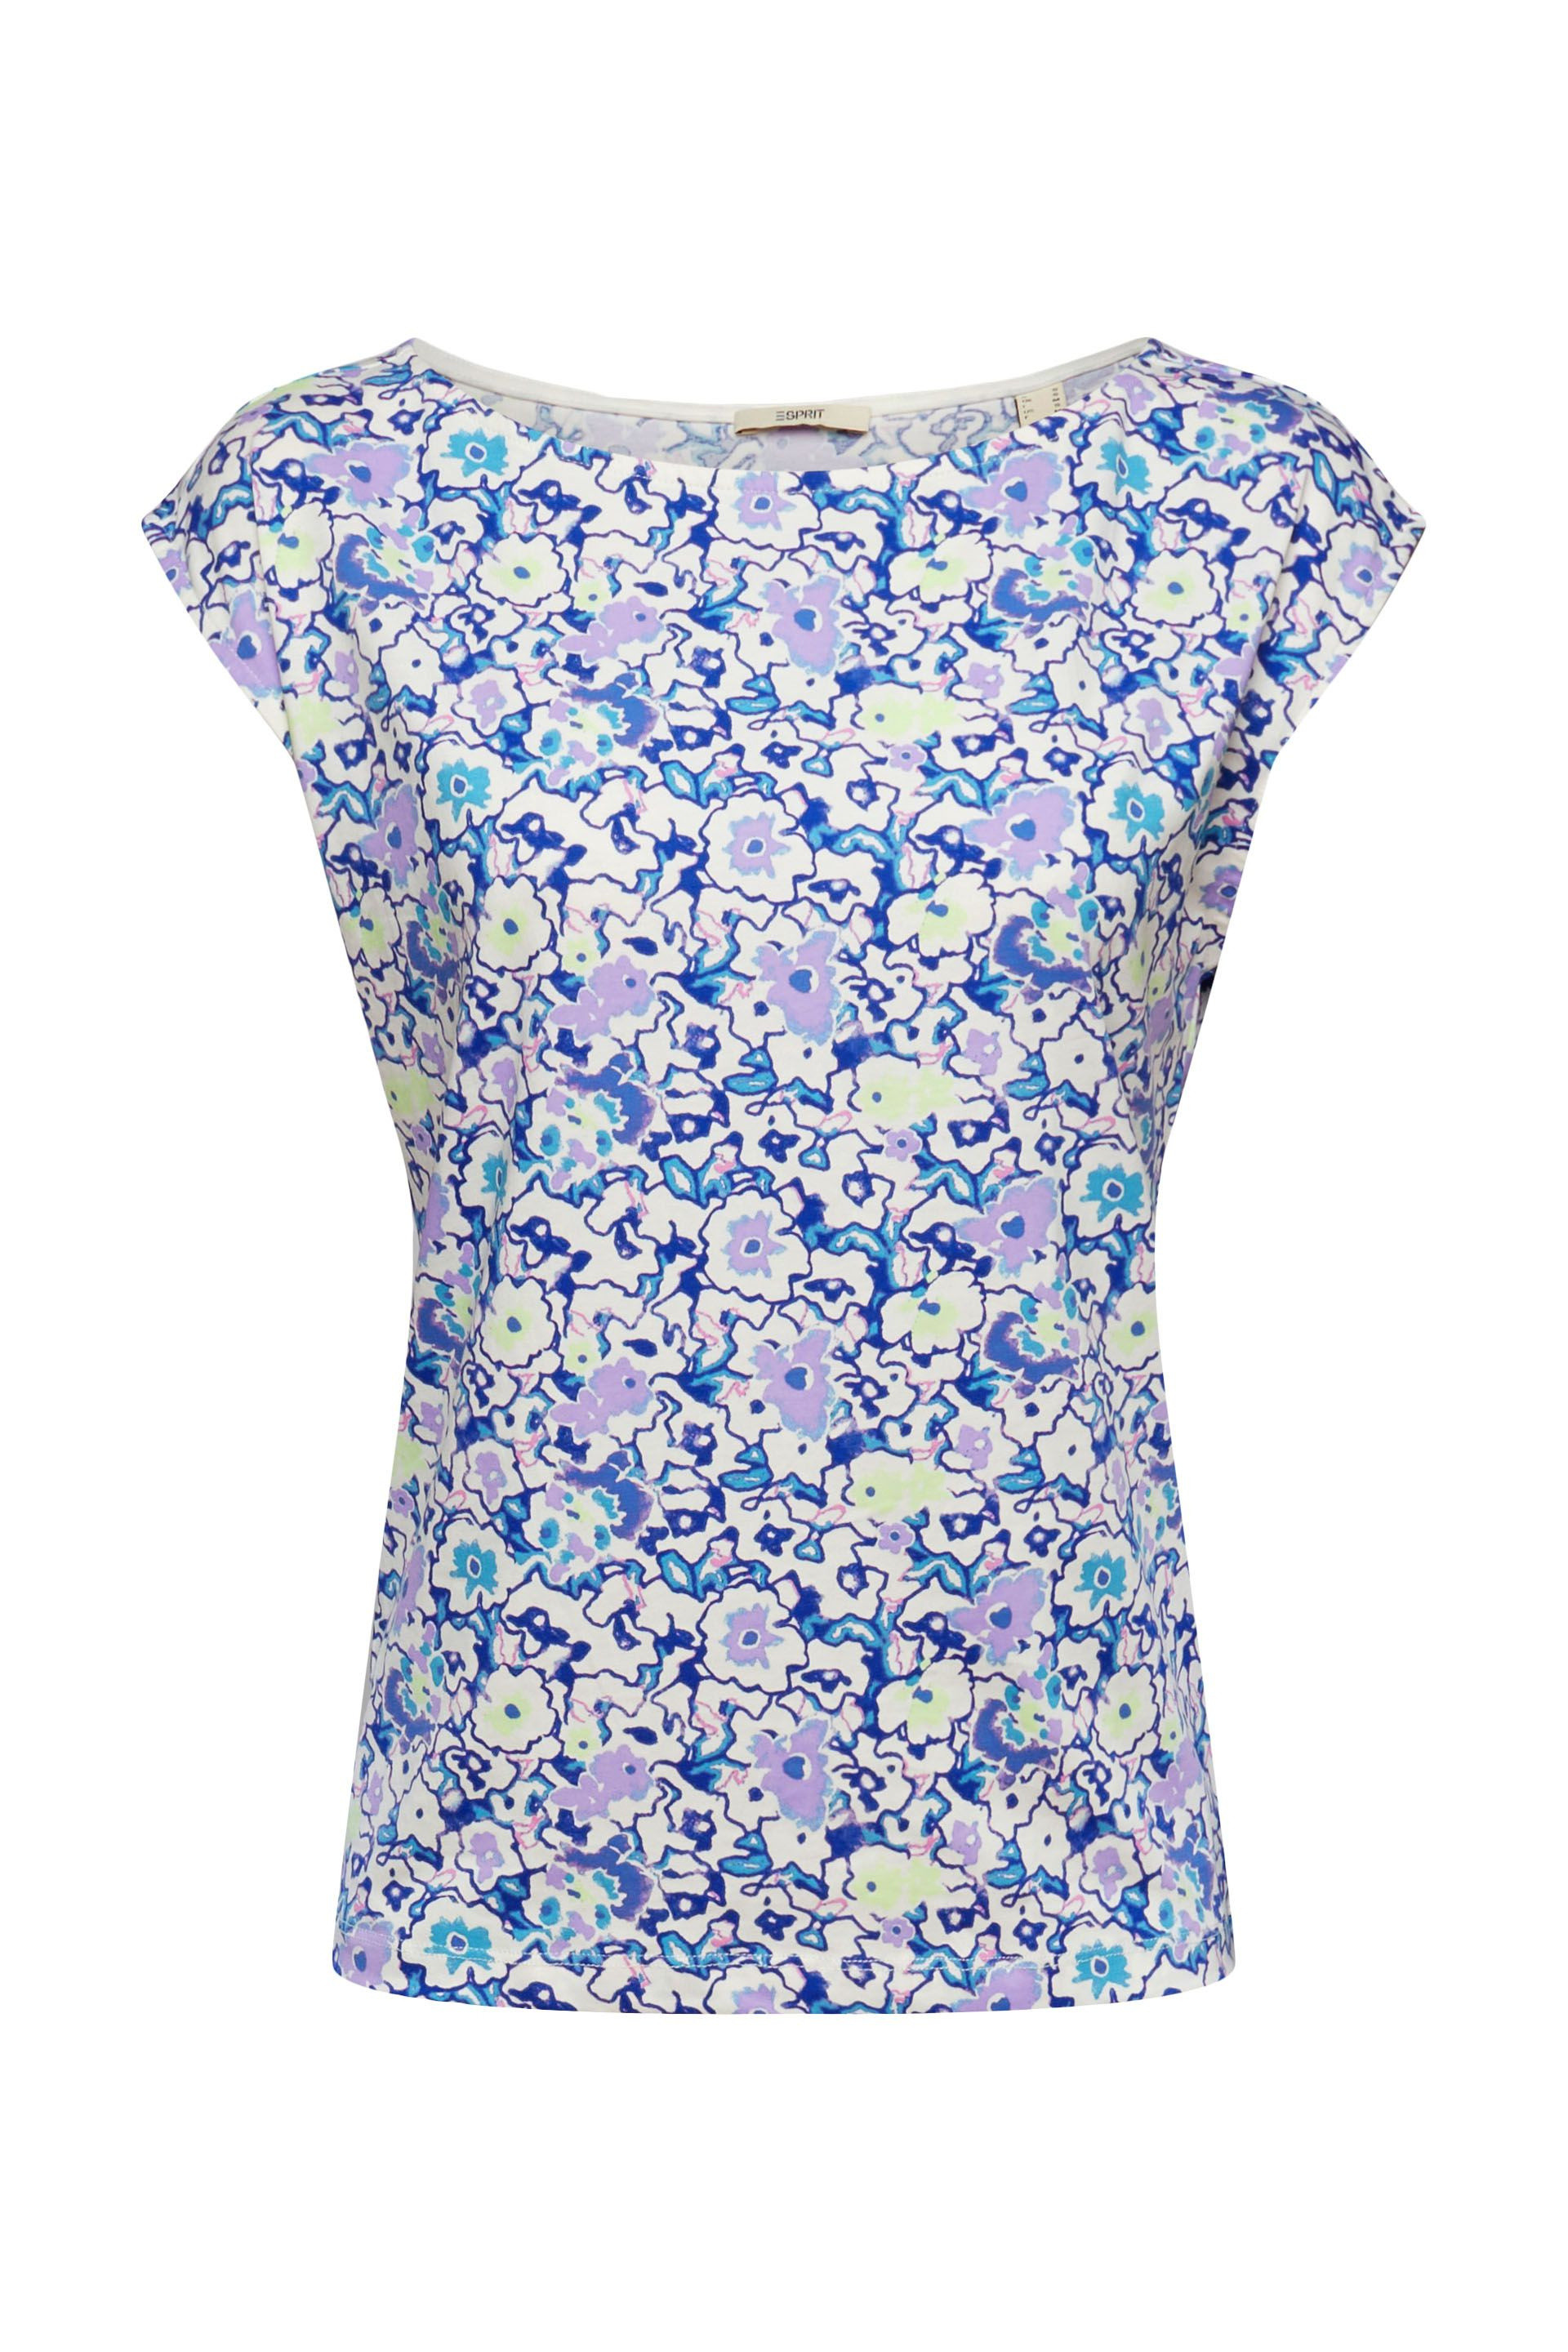 Esprit - T-shirt con stampa floreale, Blu, large image number 0